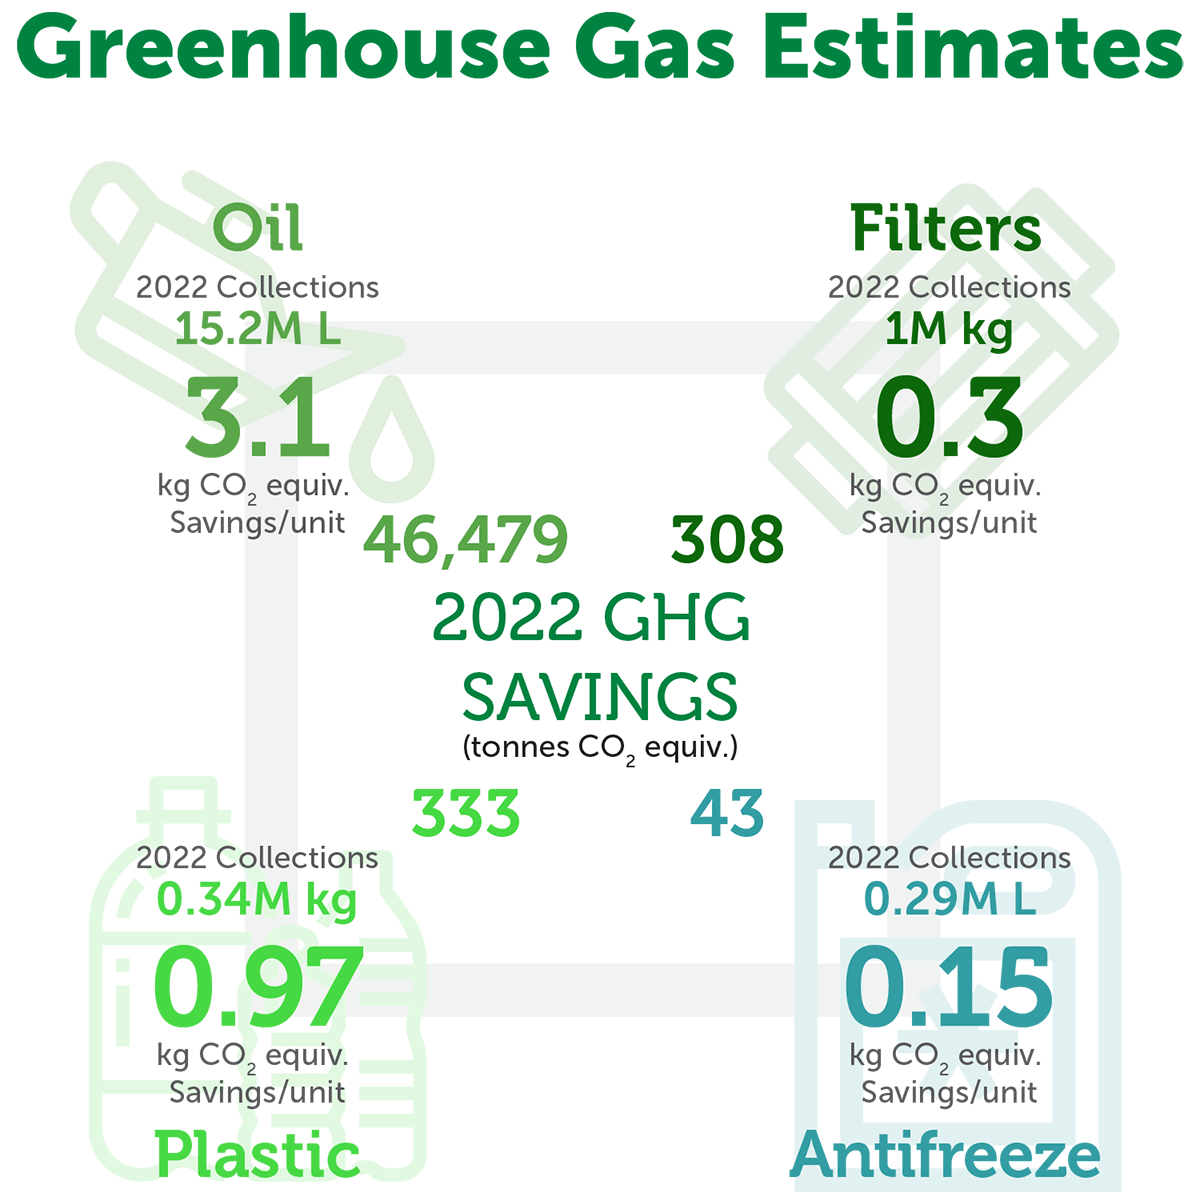 2022 Greenhouse Gas Estimates